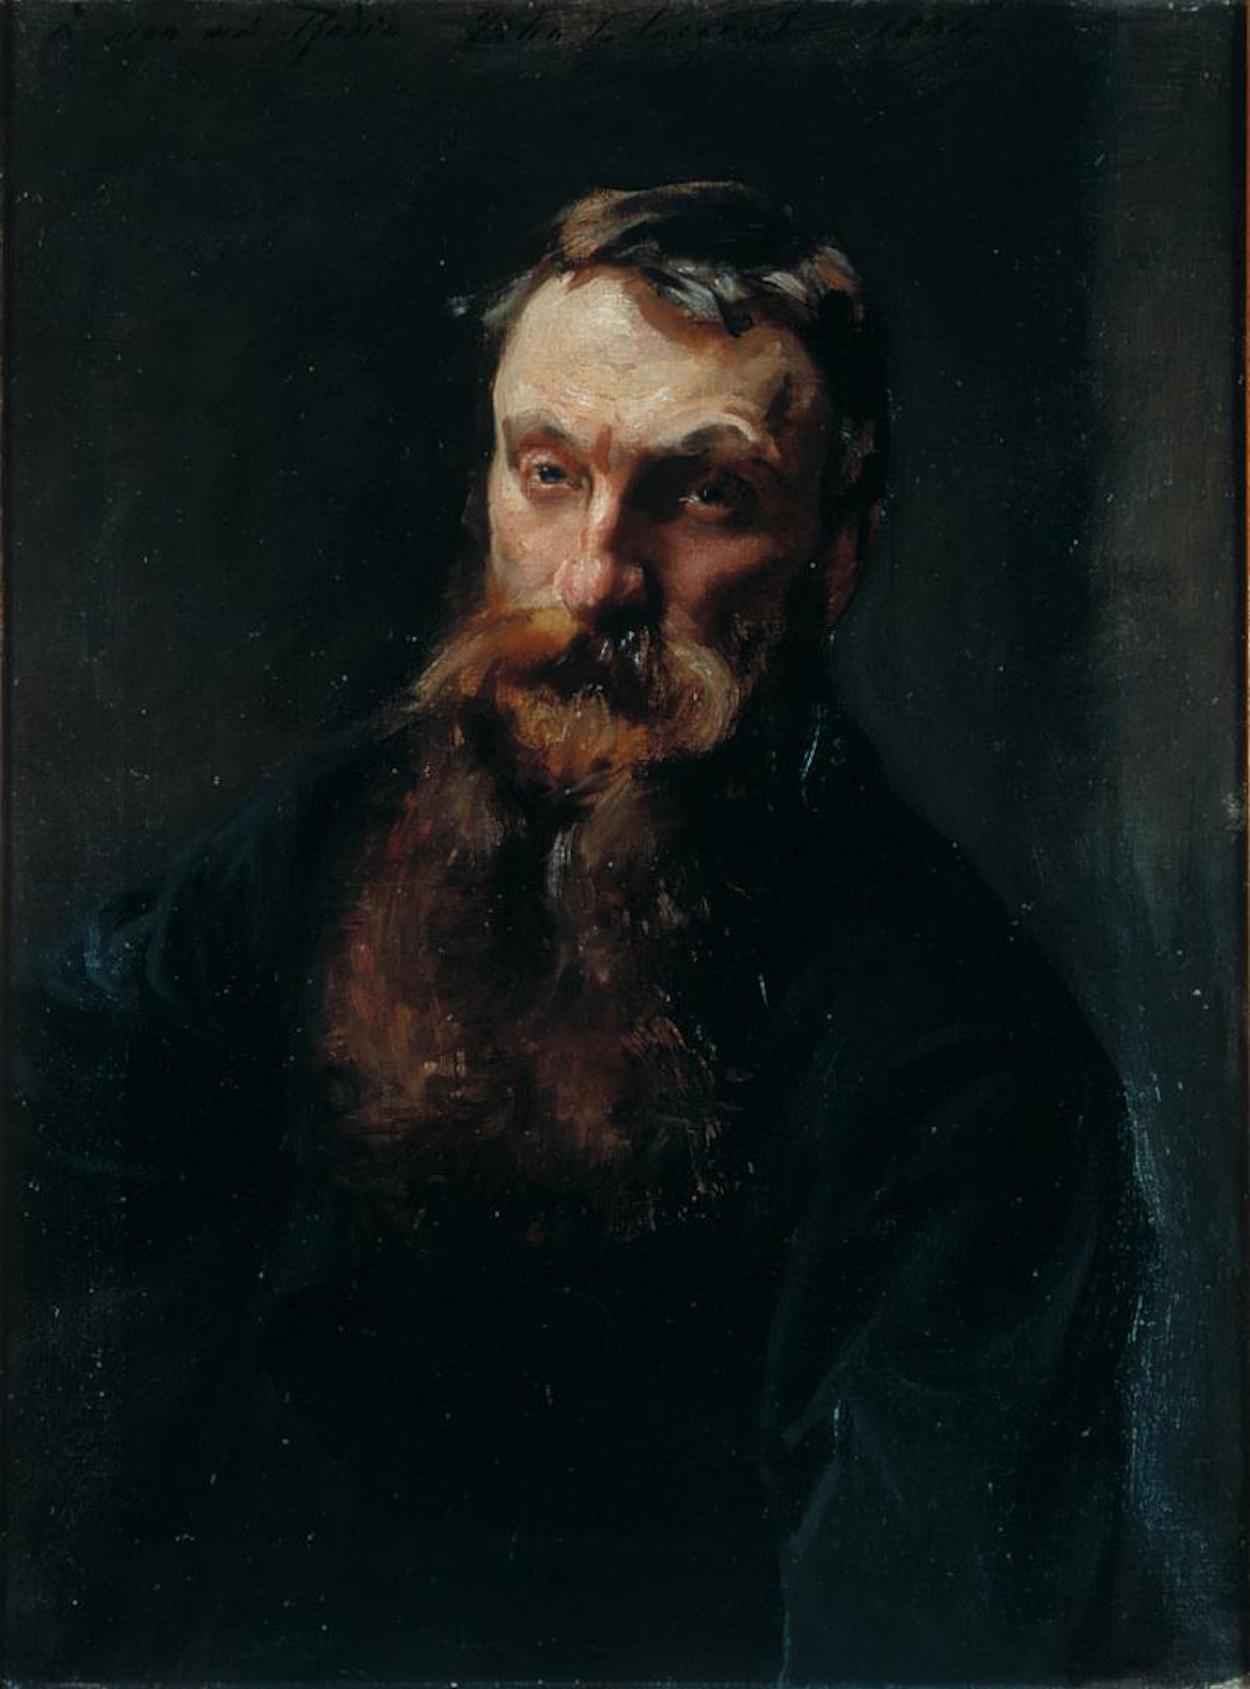 Ritratto di Rodin by John Singer Sargent - 1884 - 72 x 53 cm 